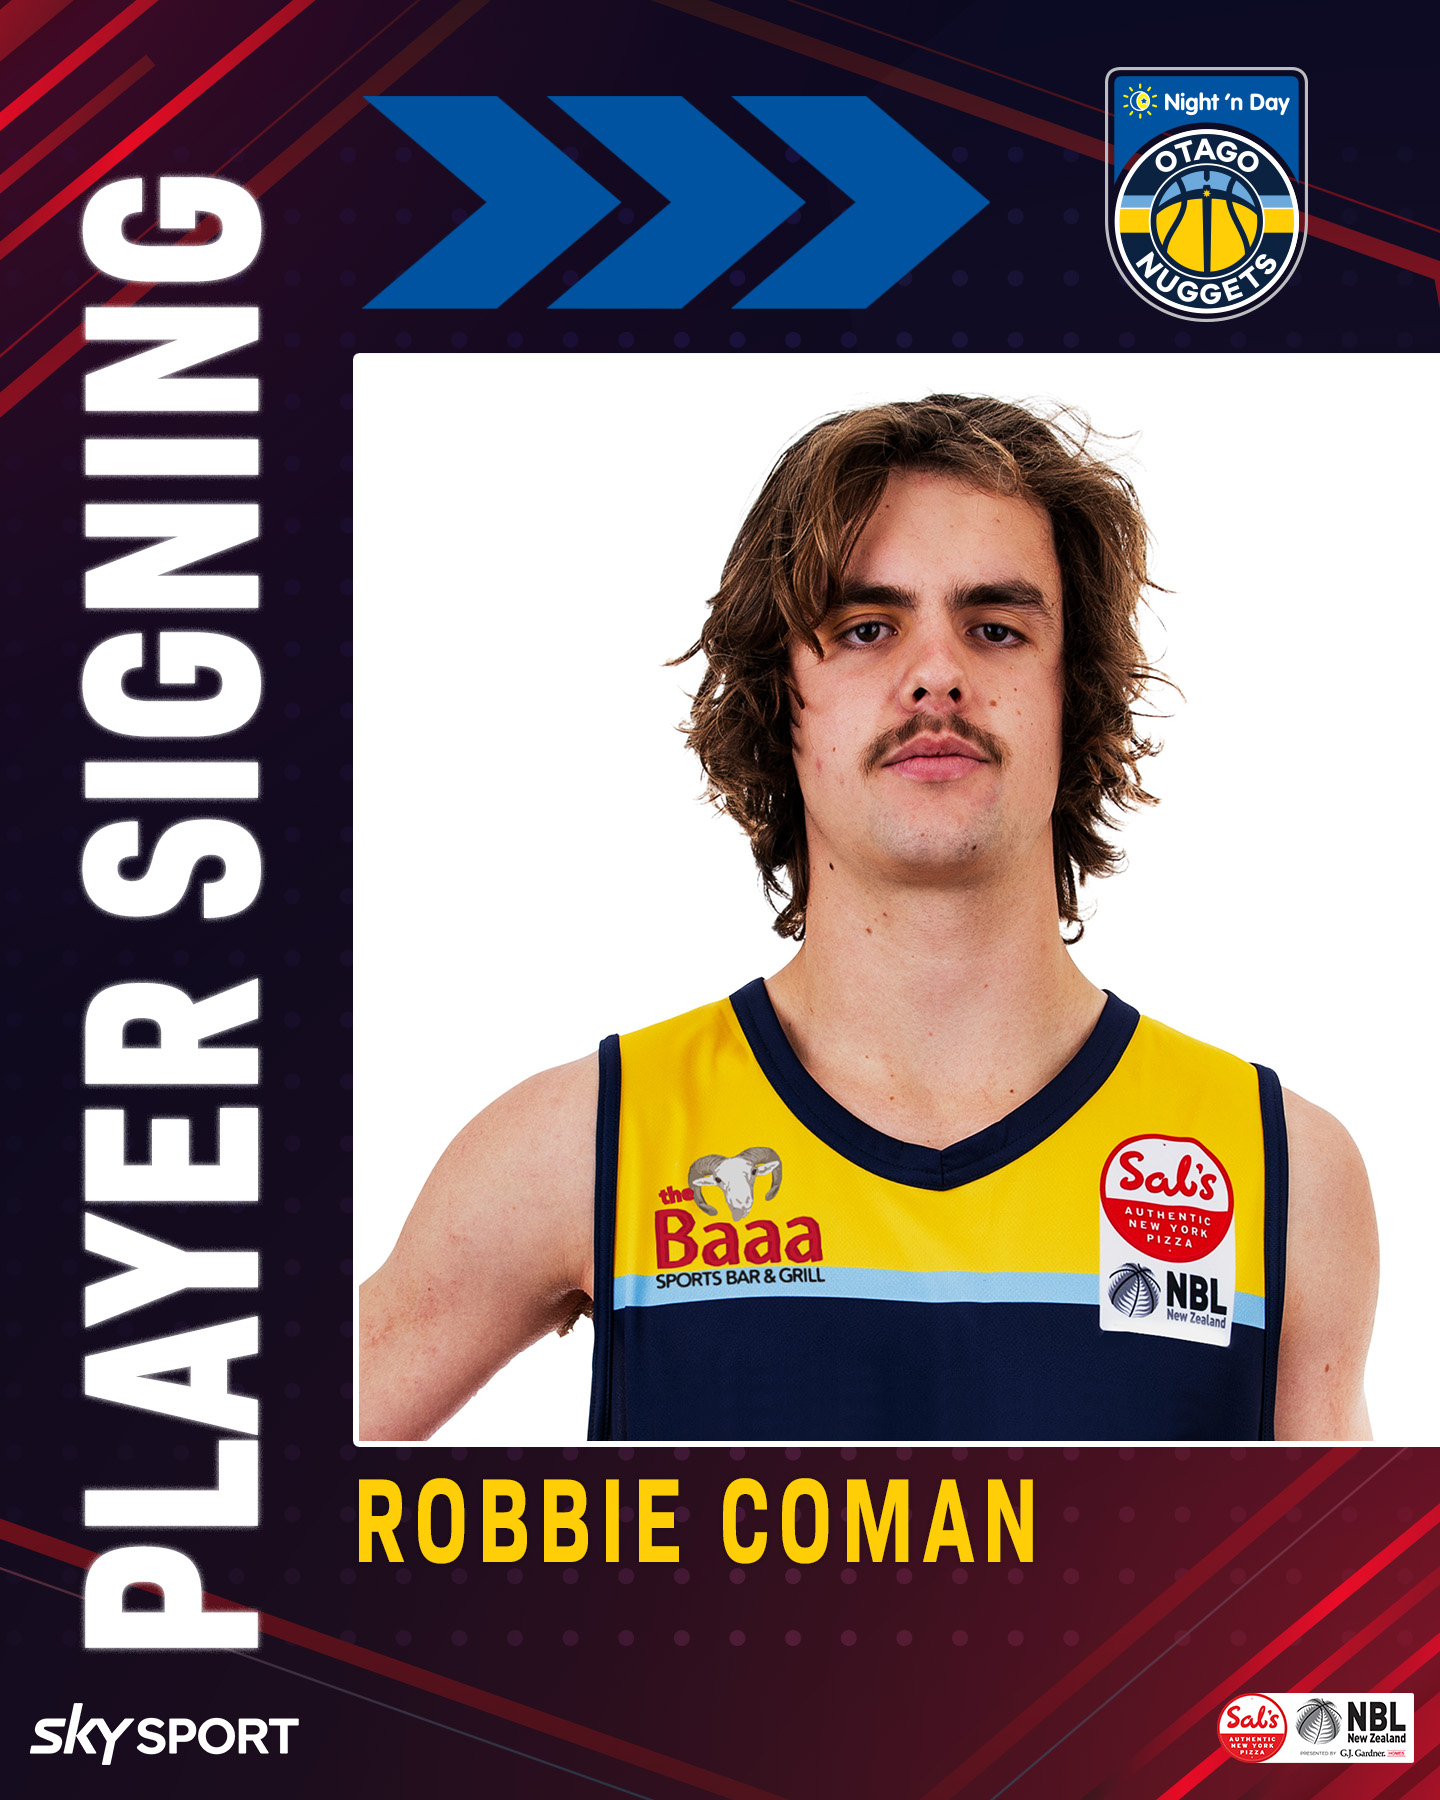 Robbie Coman